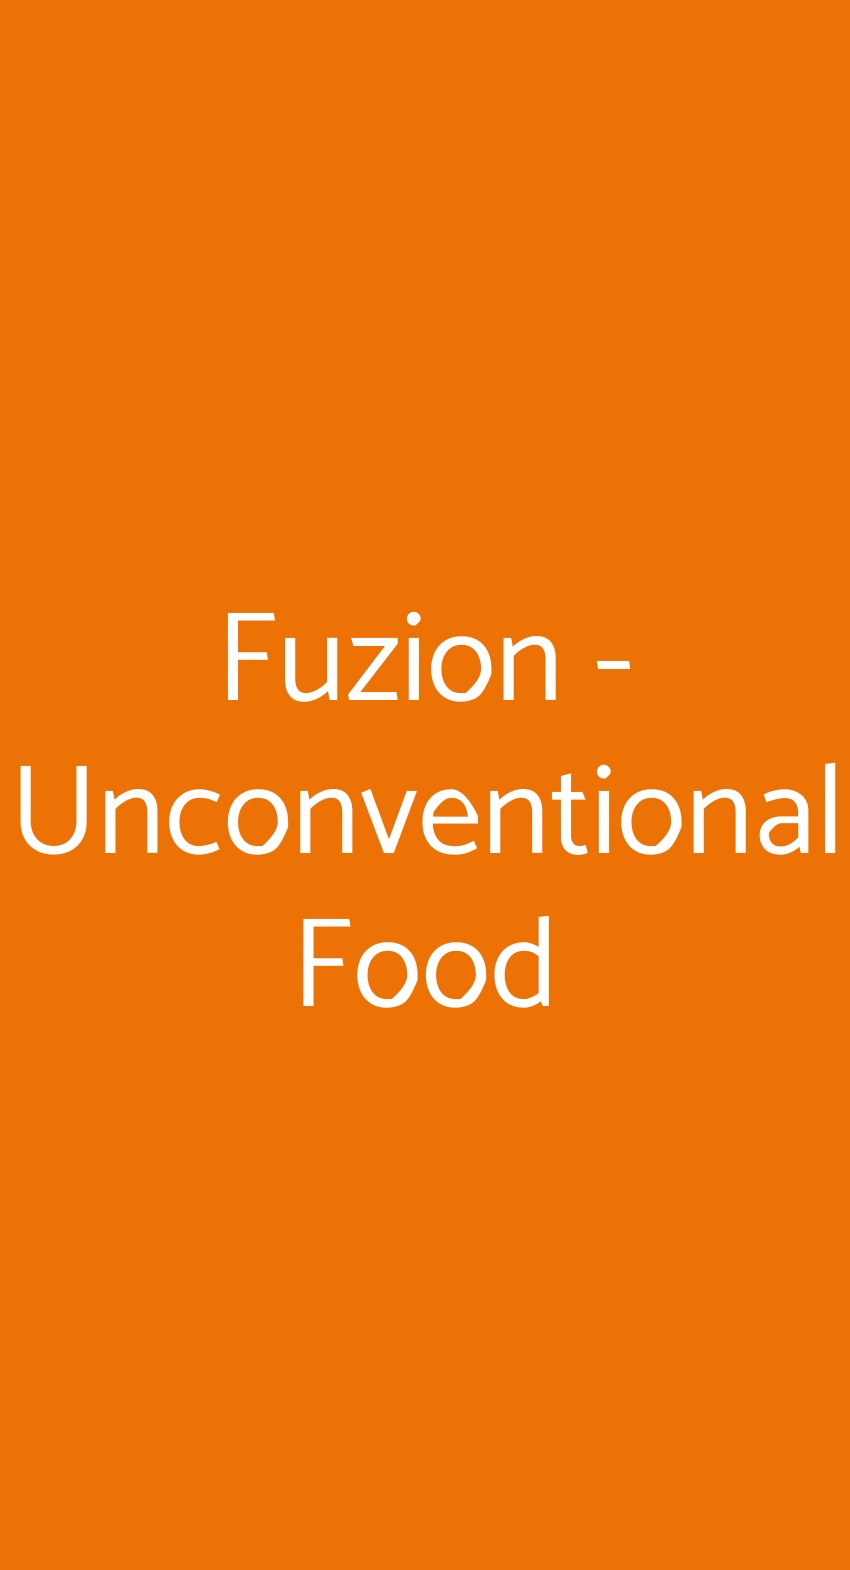 Fuzion - Unconventional Food Torino menù 1 pagina